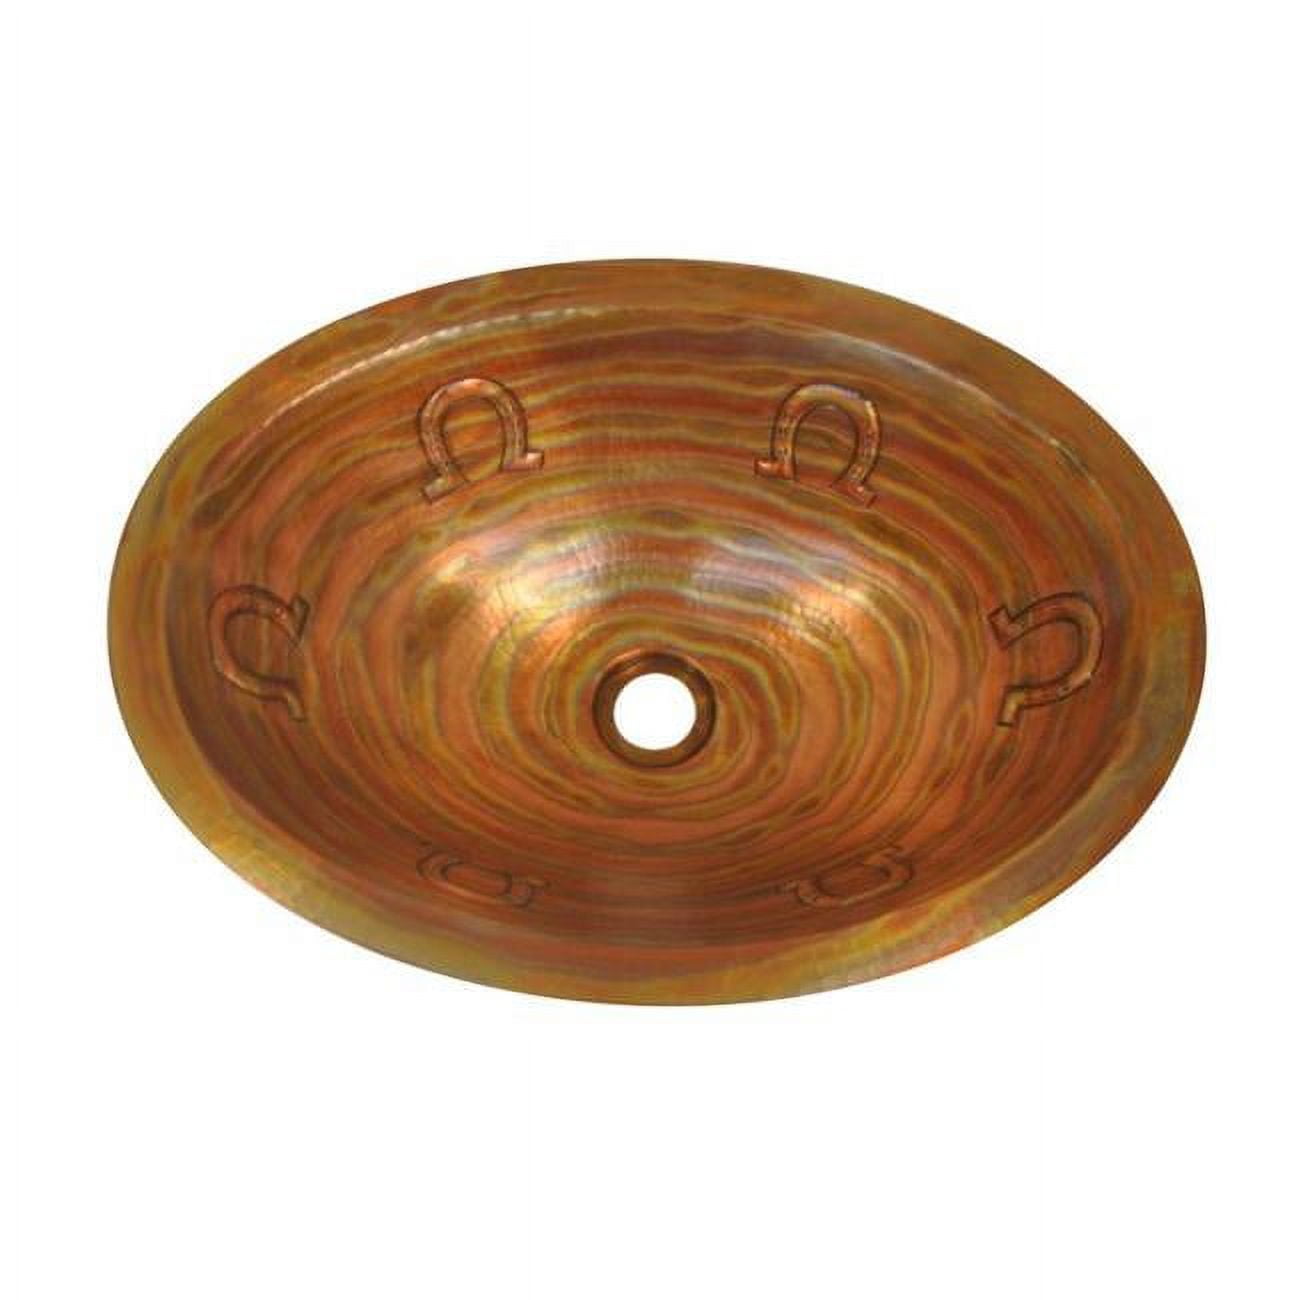 Cos-hs-19-fl-br Copper Oval Bath Sink, Bright - Horseshoe Design - 6 X 14 X 19 In.